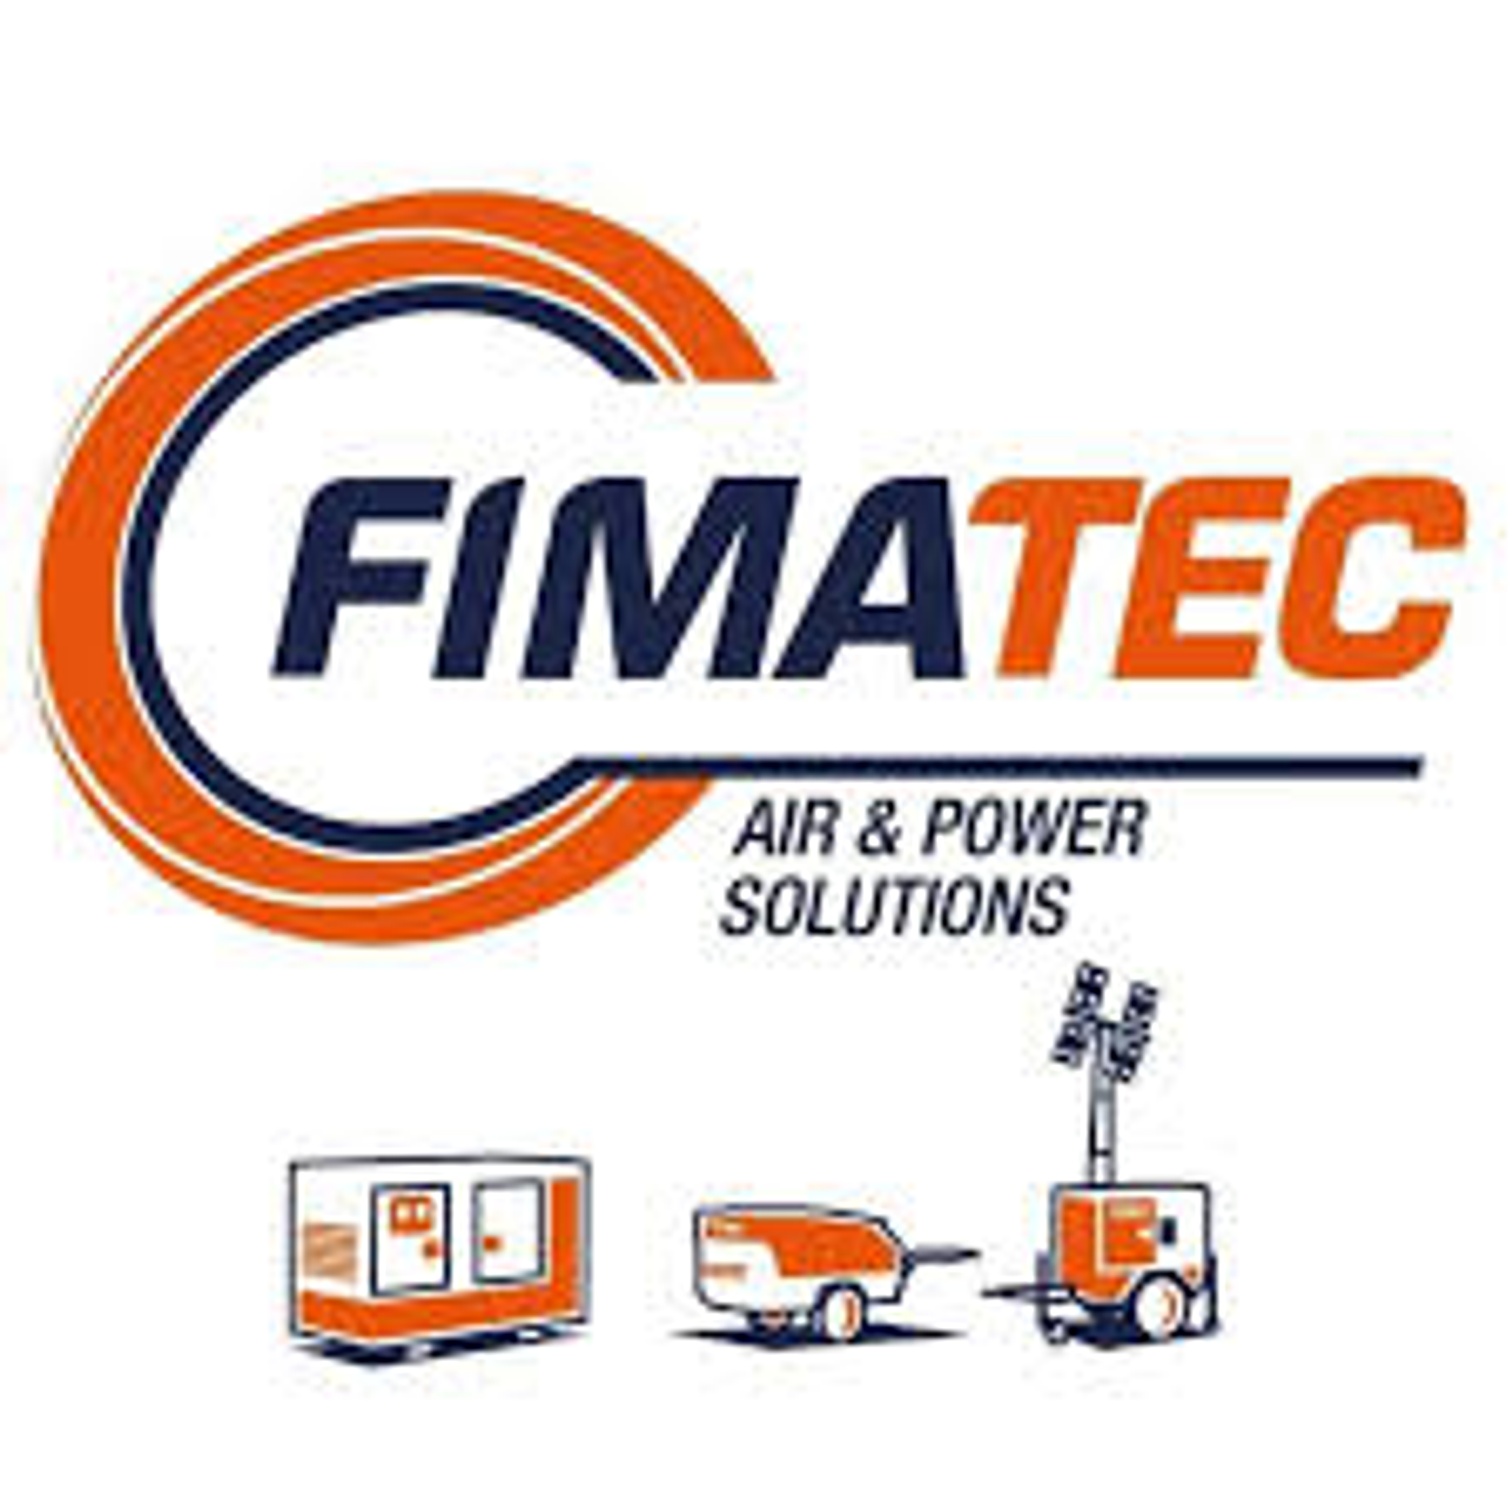 Fimatec - Air & Power solutions logo